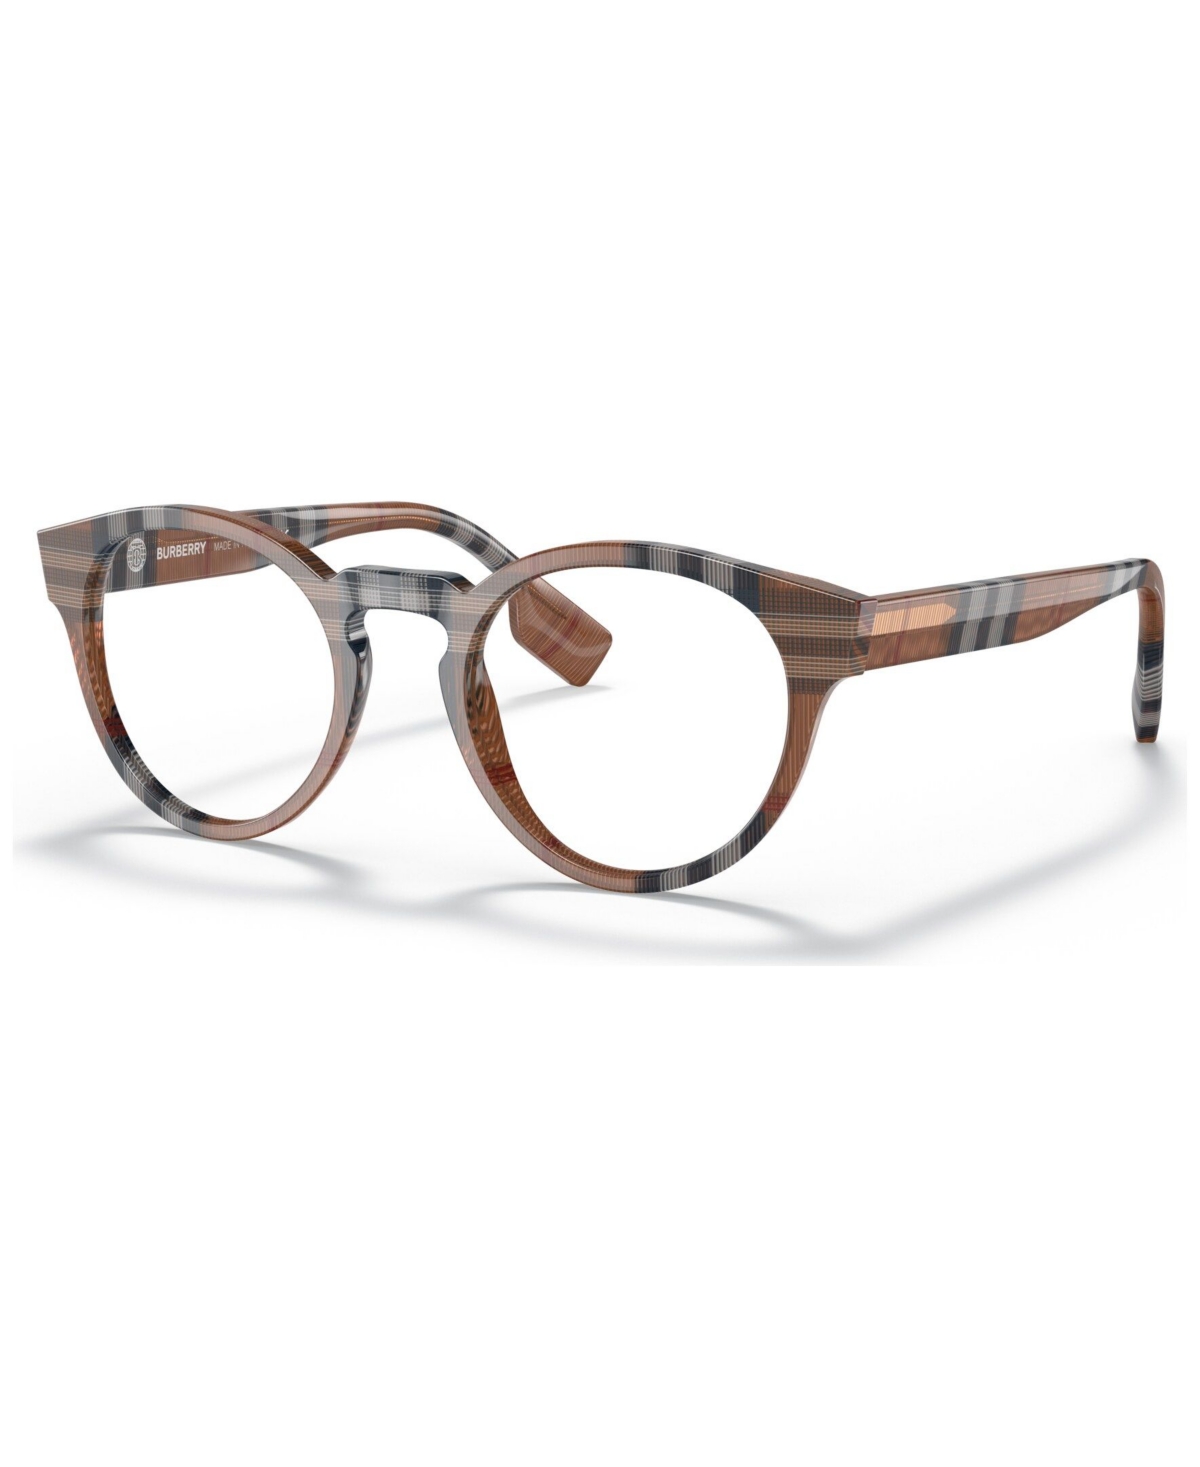 BE2354 Grant Men's Phantos Eyeglasses - Check Brown